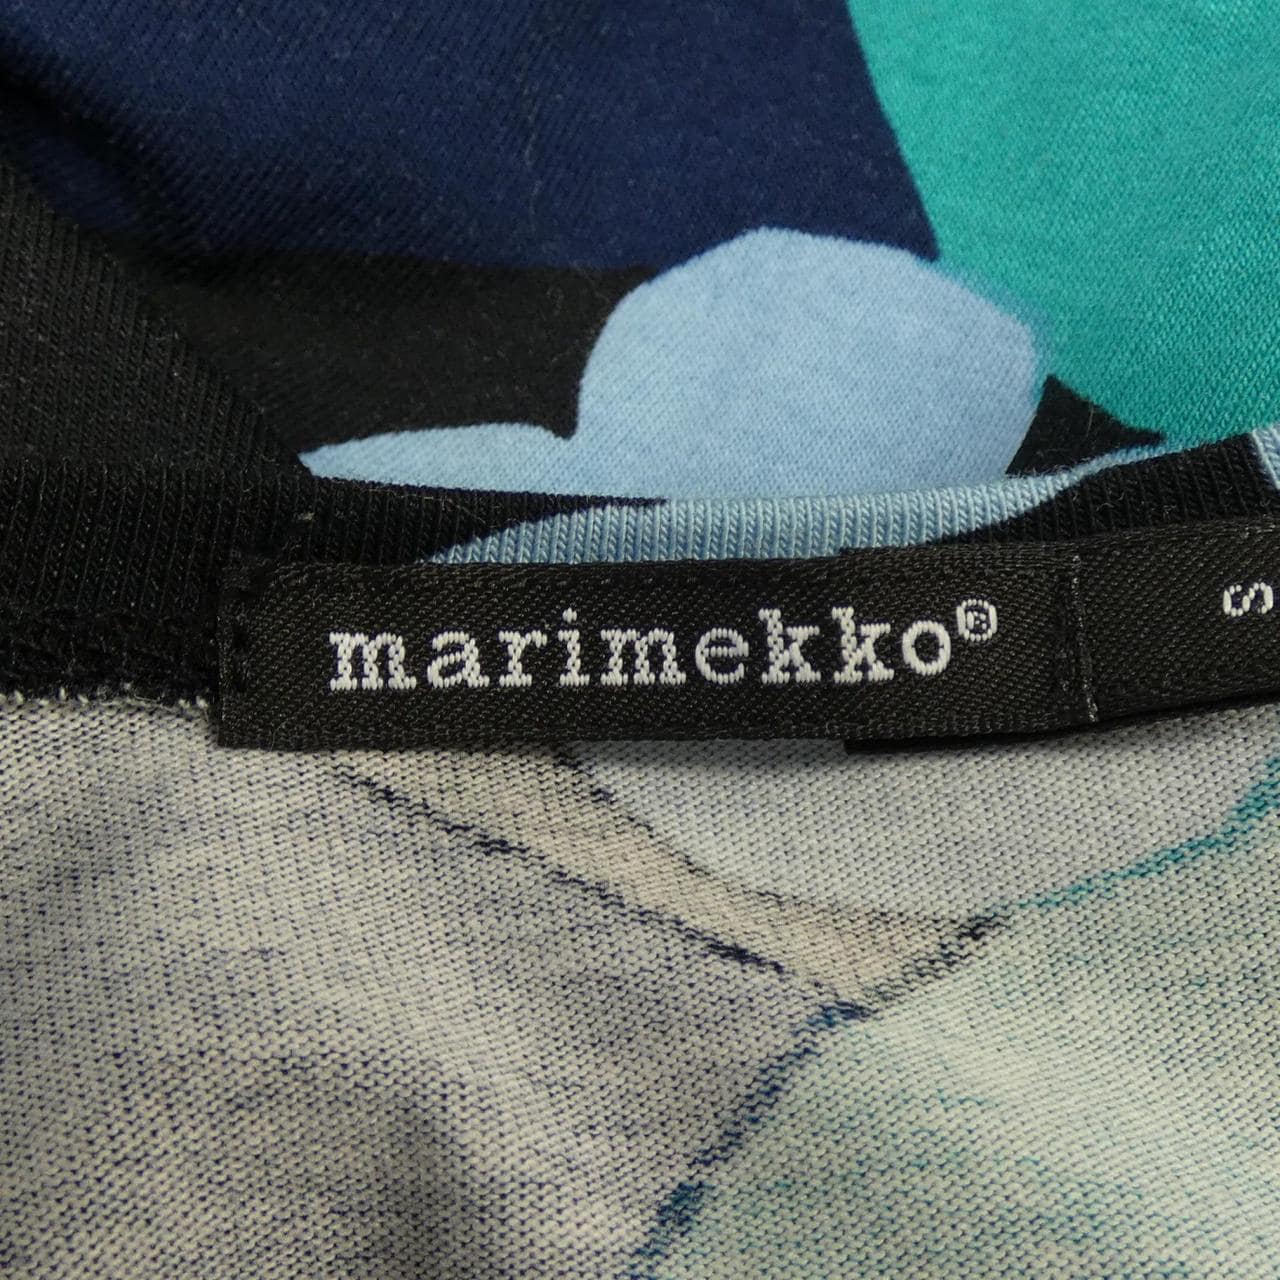 Marimekko MARIMEKKO连衣裙